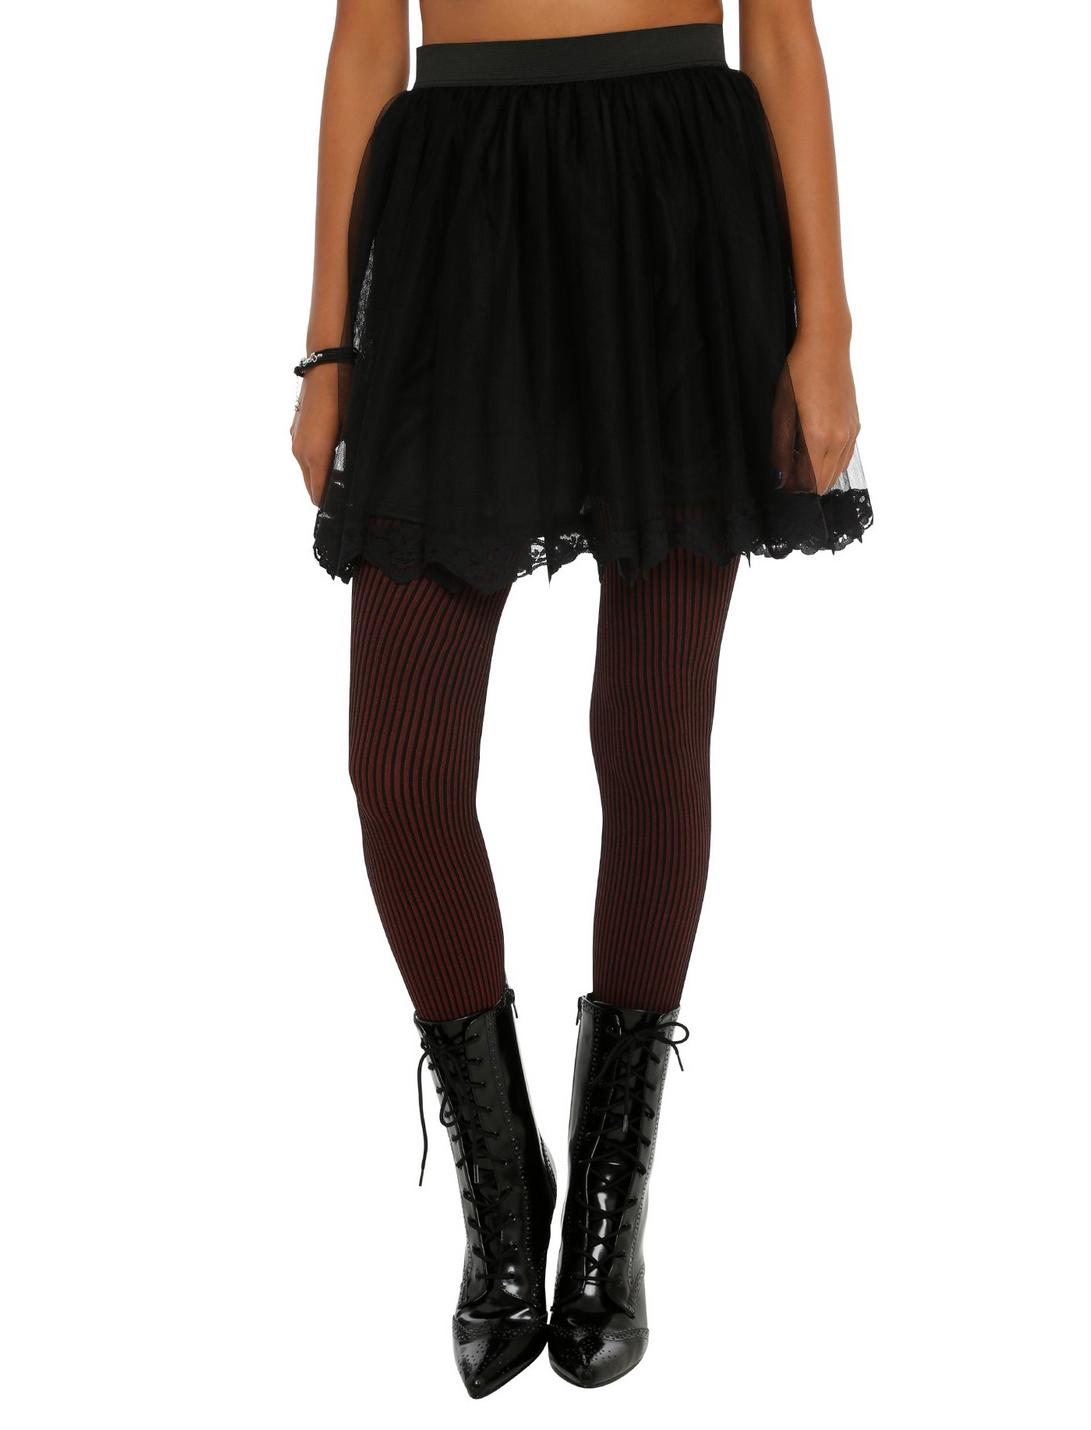 Black Lace Trim Skirt, BLACK, hi-res